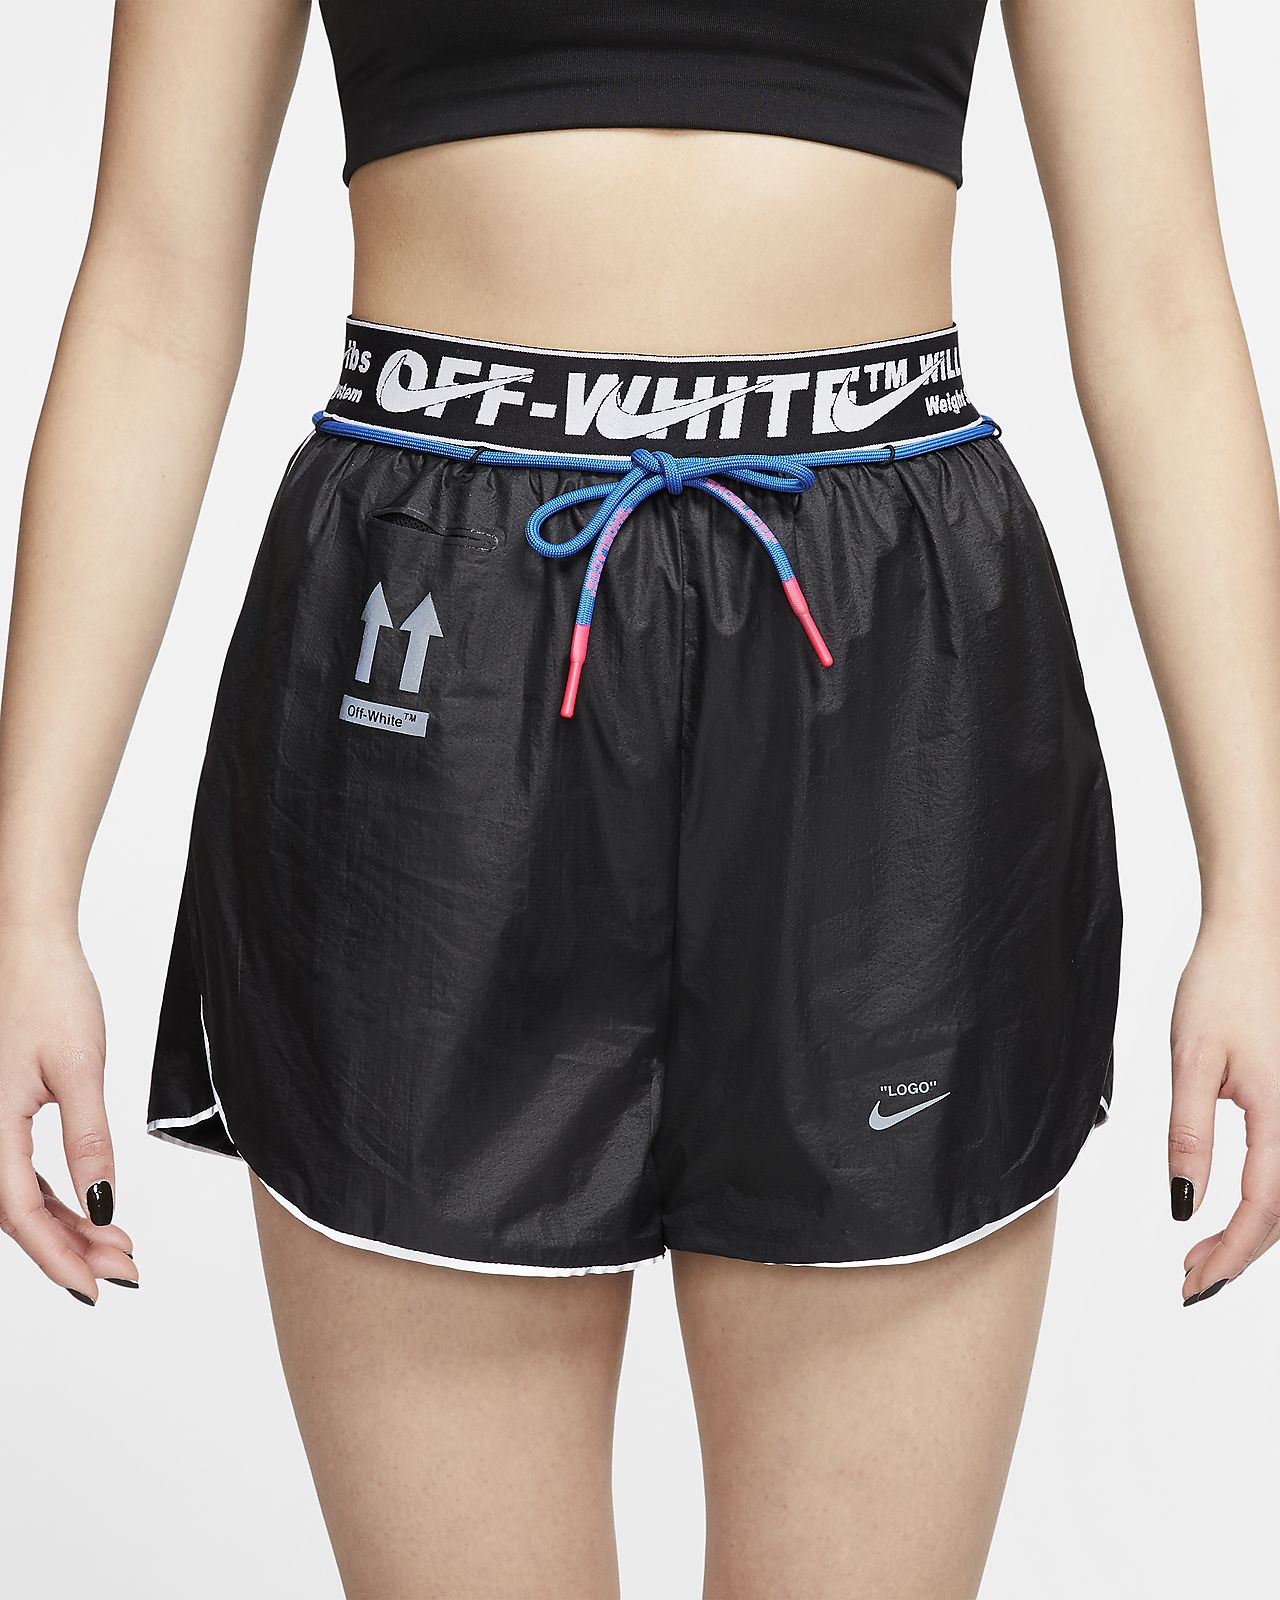 off white nike womens shorts